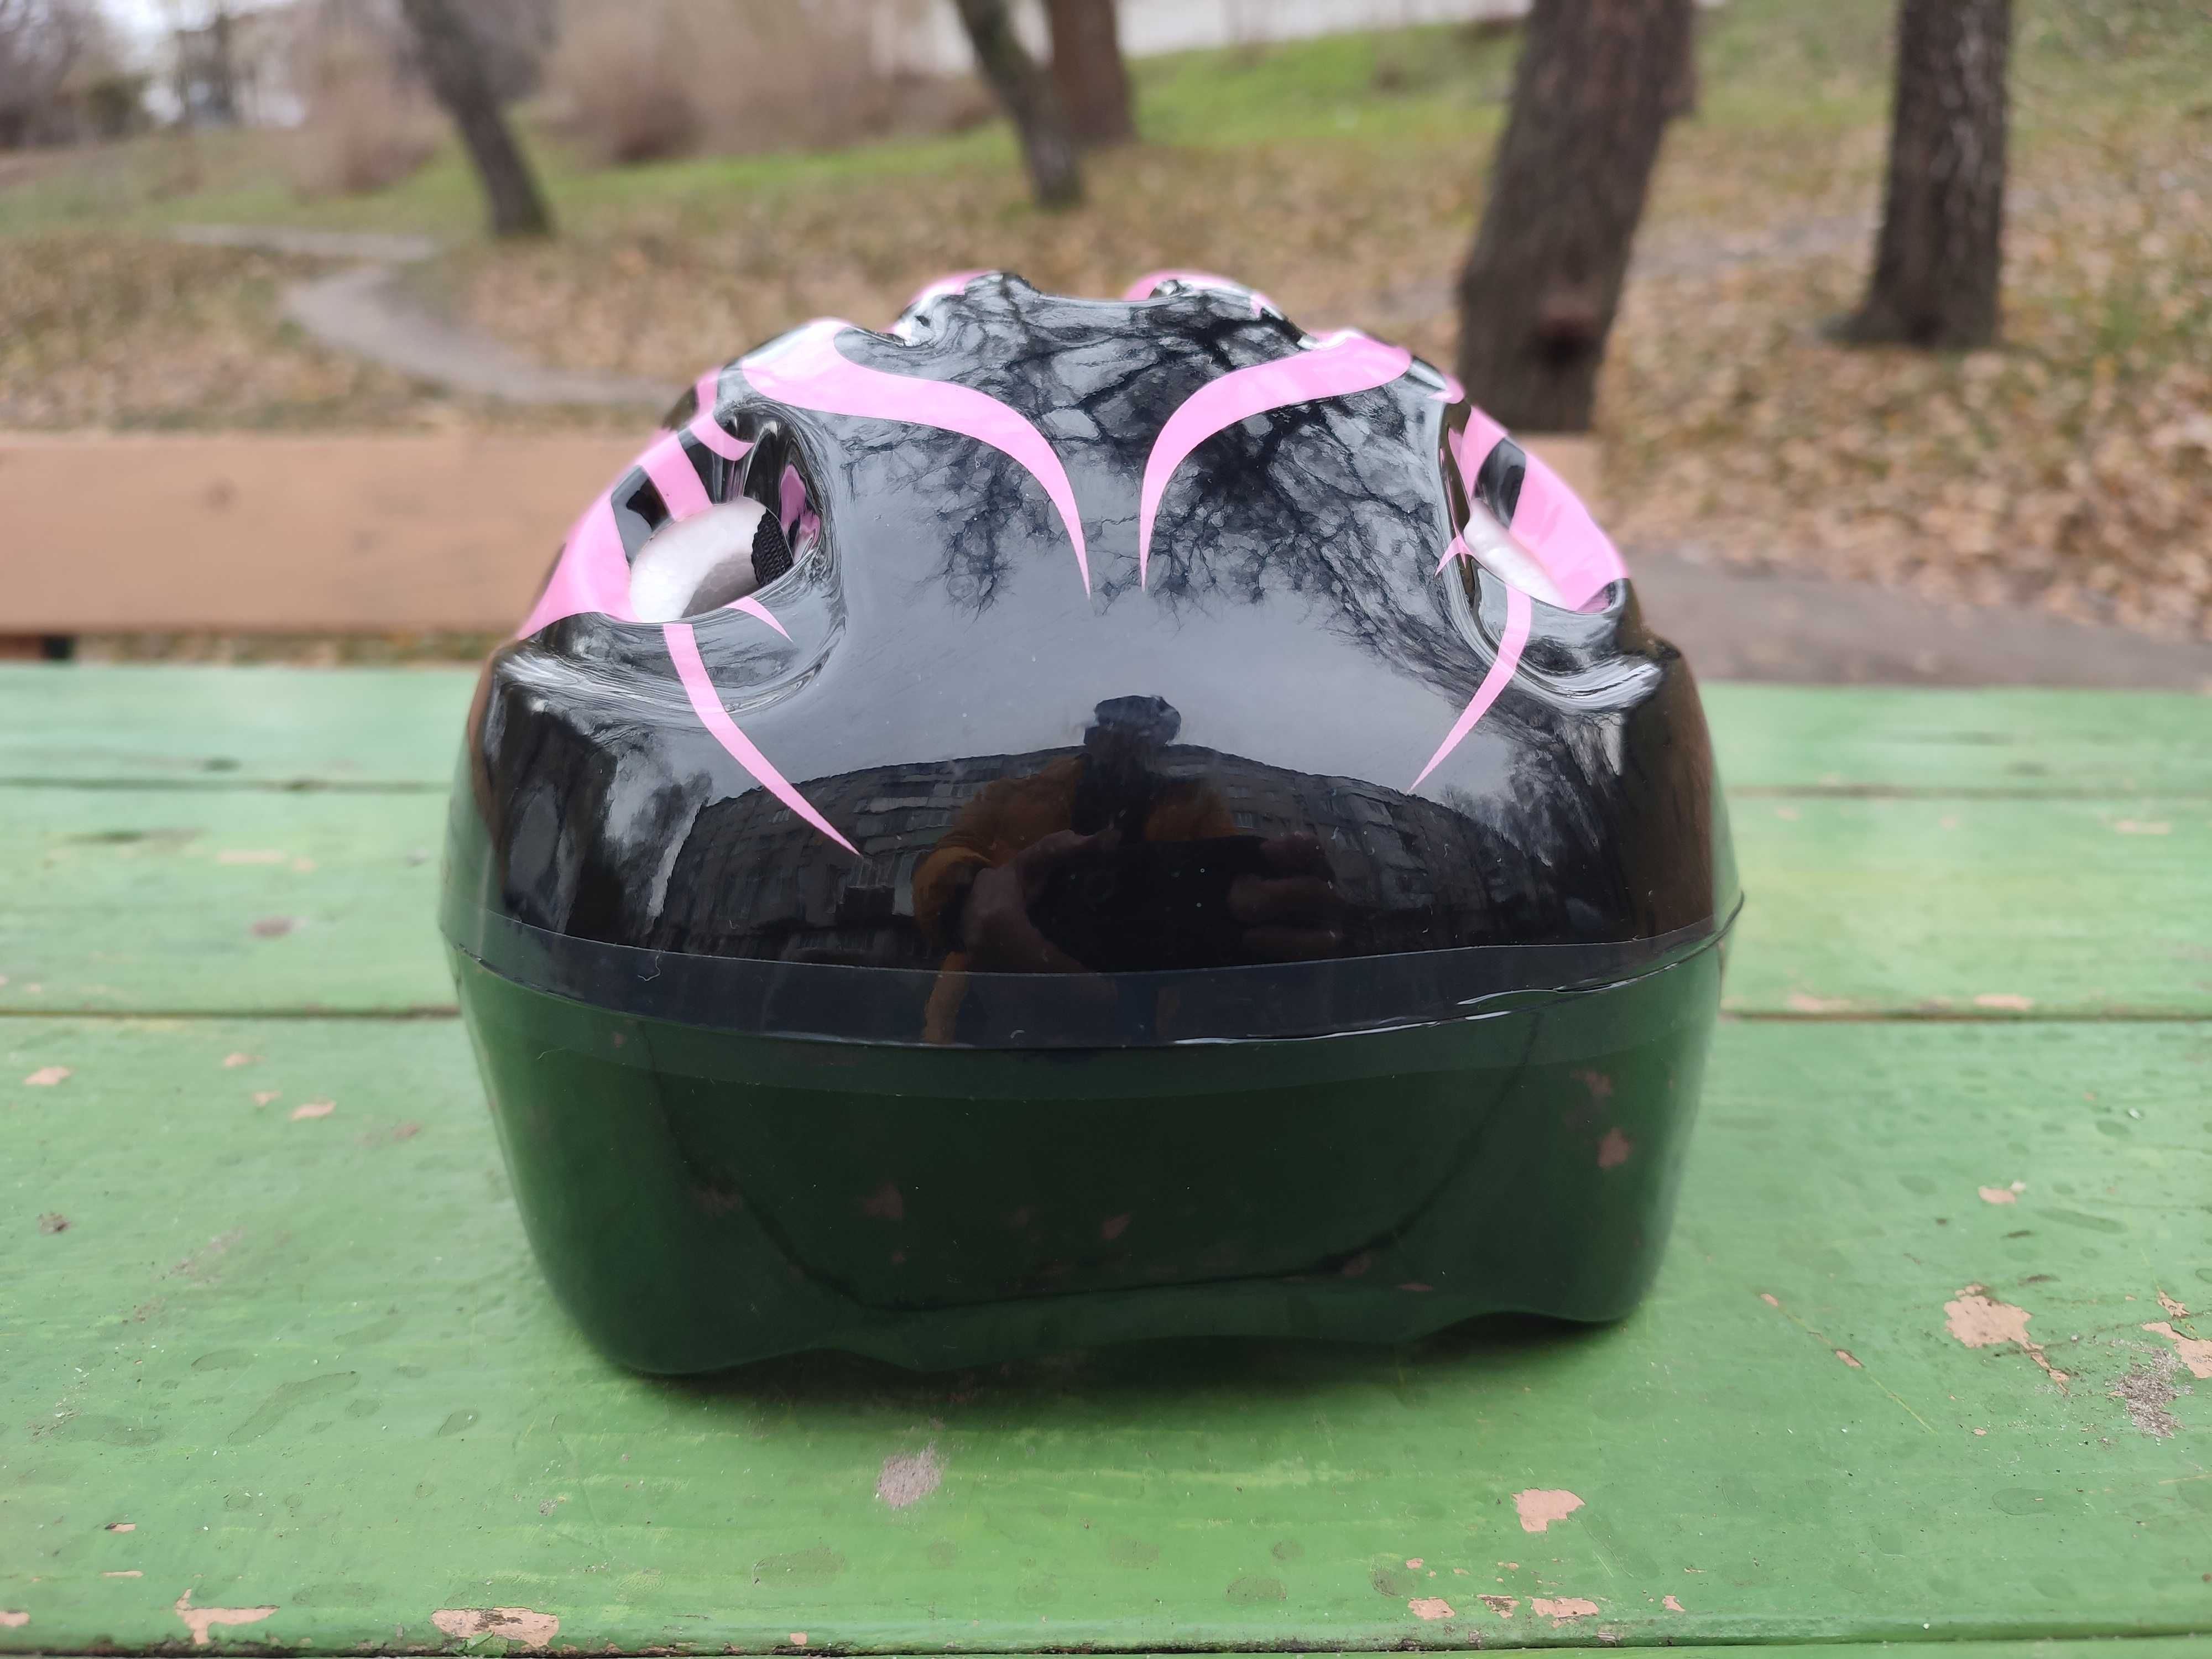 Детский розовый шлем - S 48-52 см